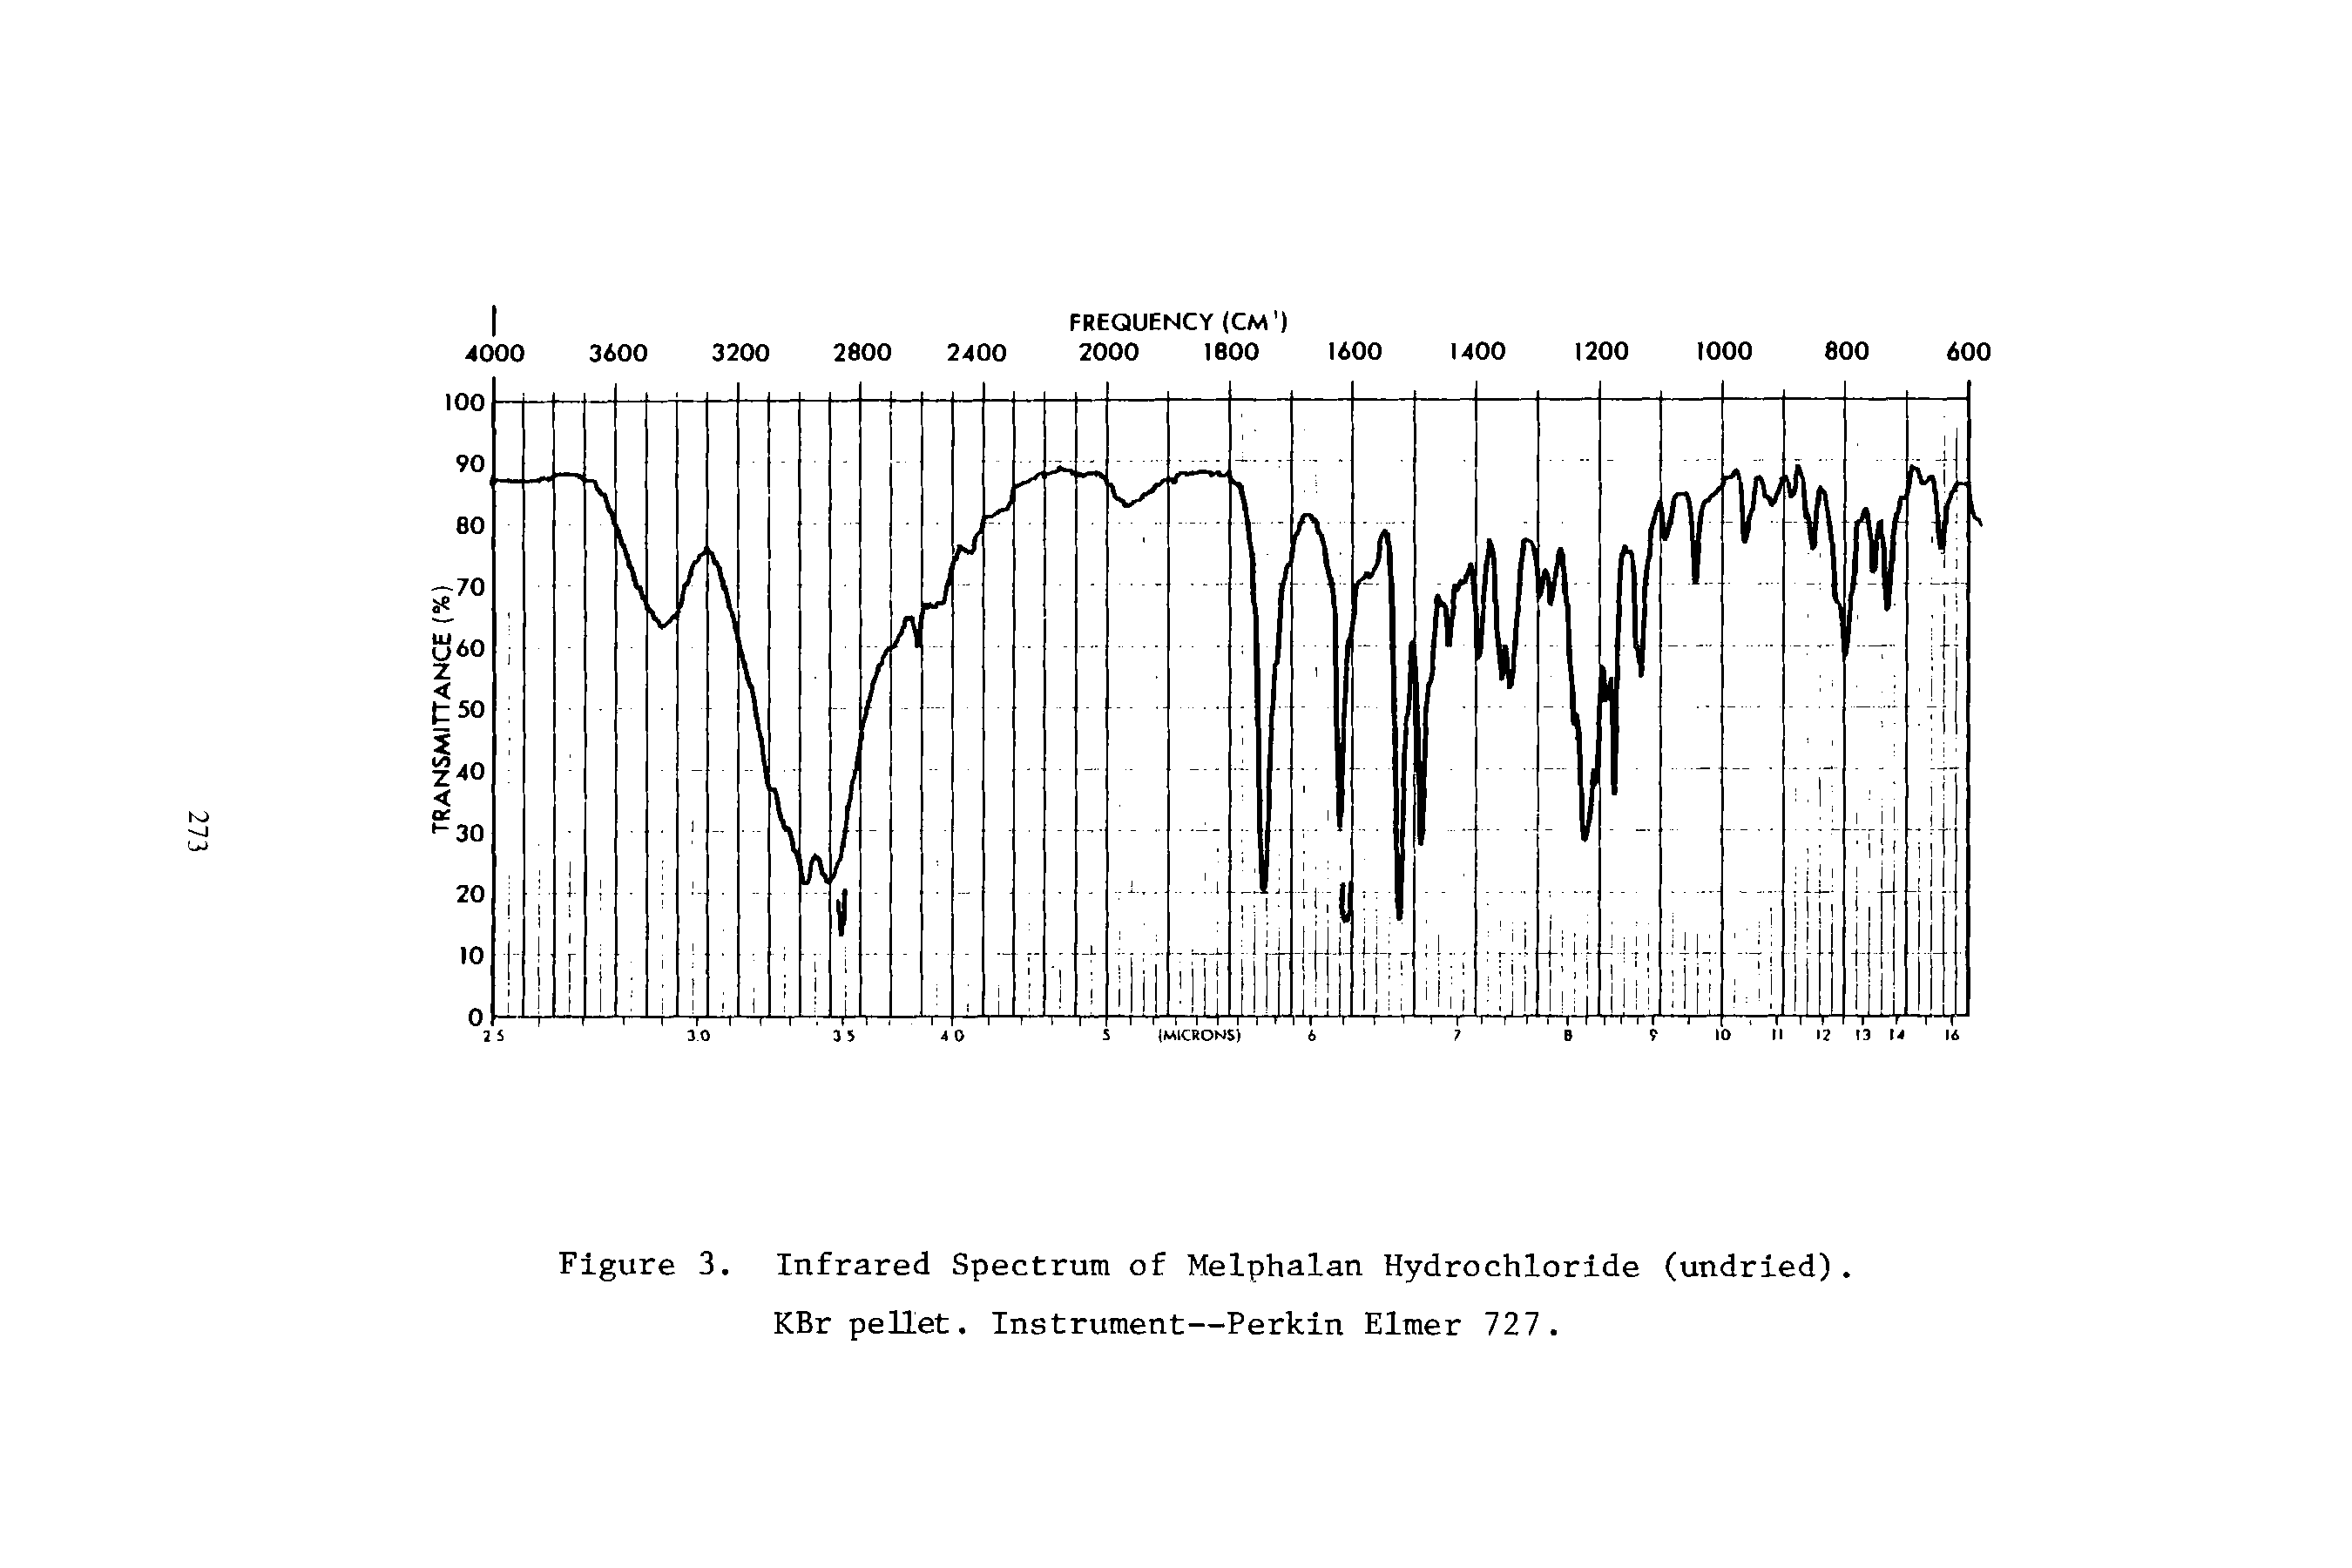 Figure 3. Infrared Spectrum of Melphalan Hydrochloride (undried). KBr pellet. Instrument—Perkin Elmer 727.